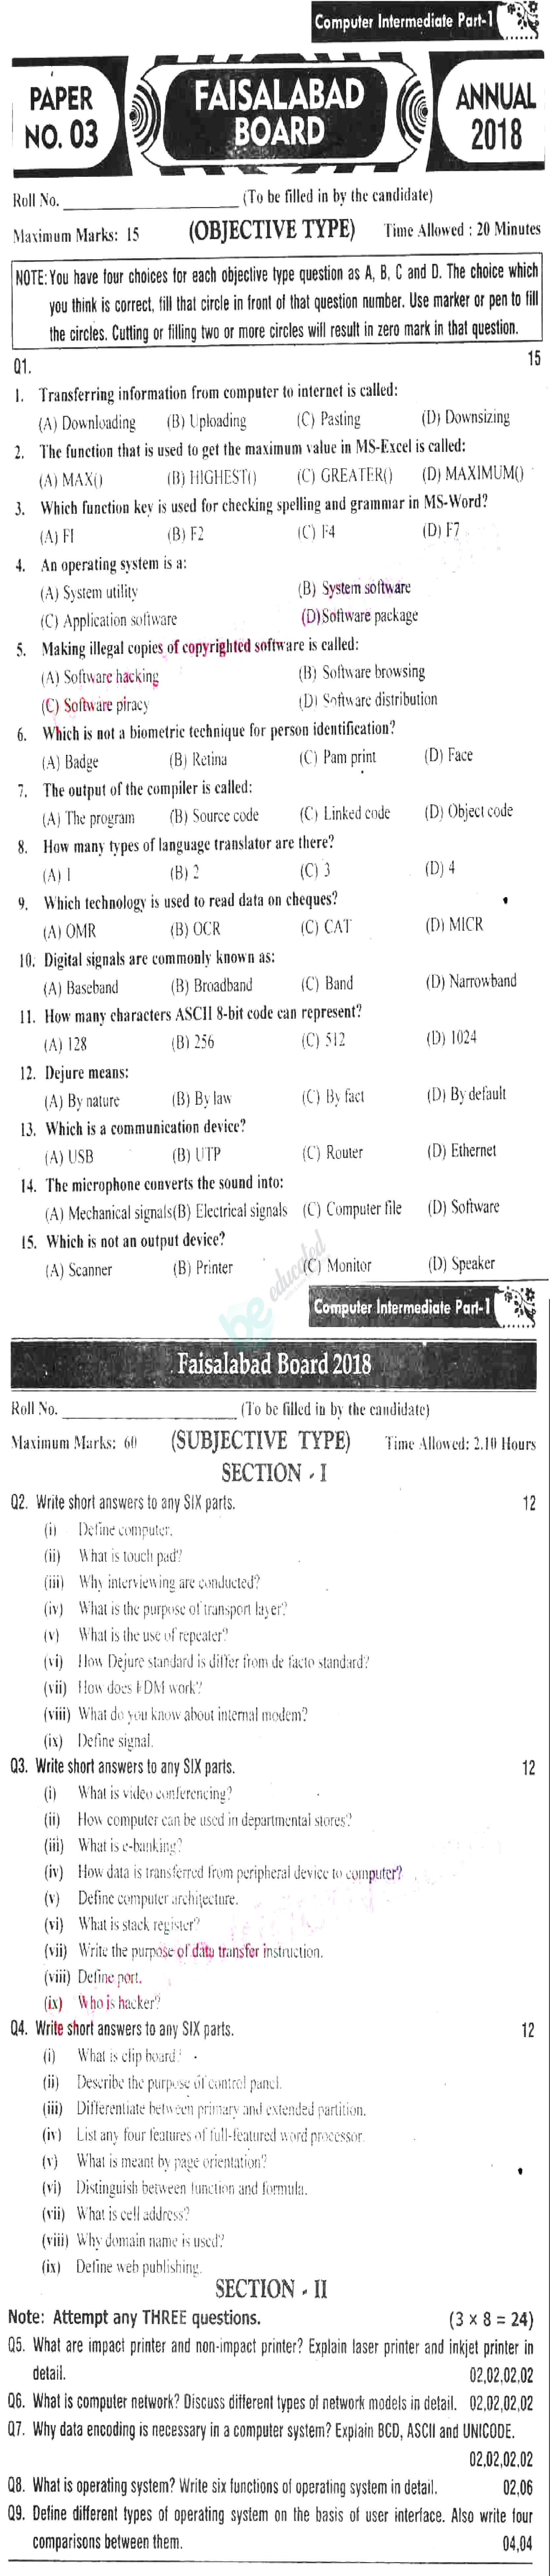 Computer Science ICS Part 1 Past Paper Group 1 BISE Faisalabad 2018